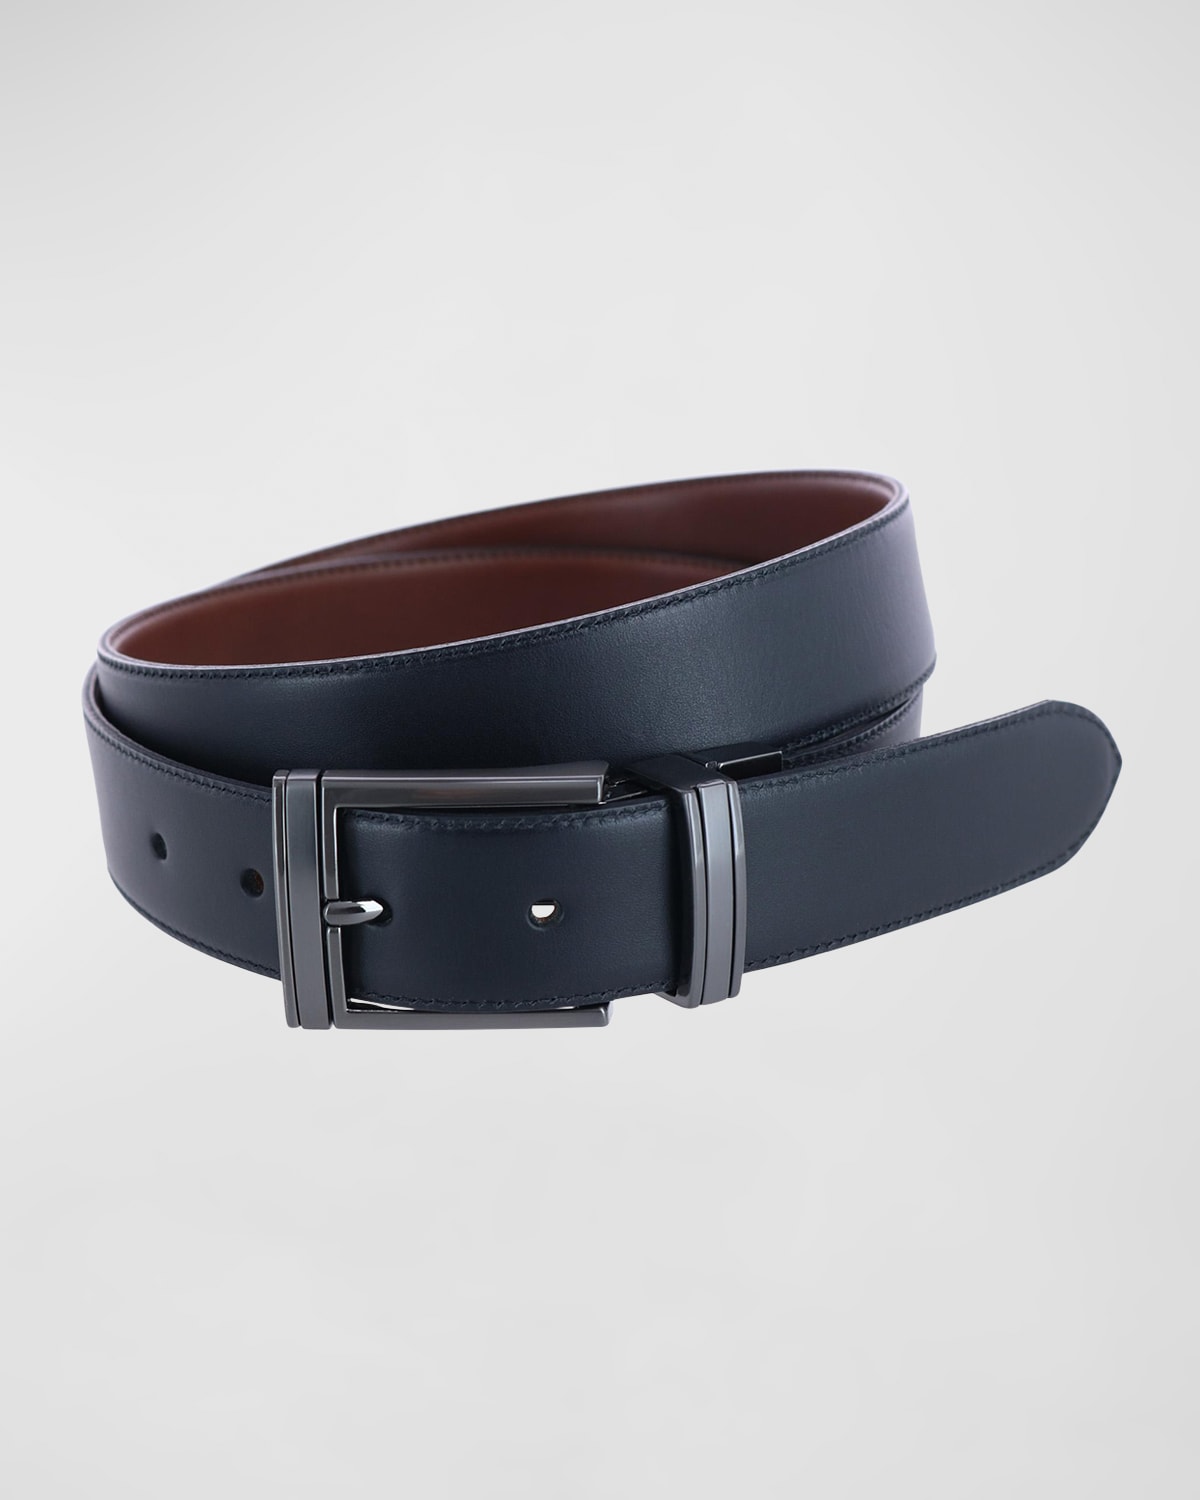 Trafalgar Men's Maverick 32mm Reversible Leather Dress Belt In Black To Brown